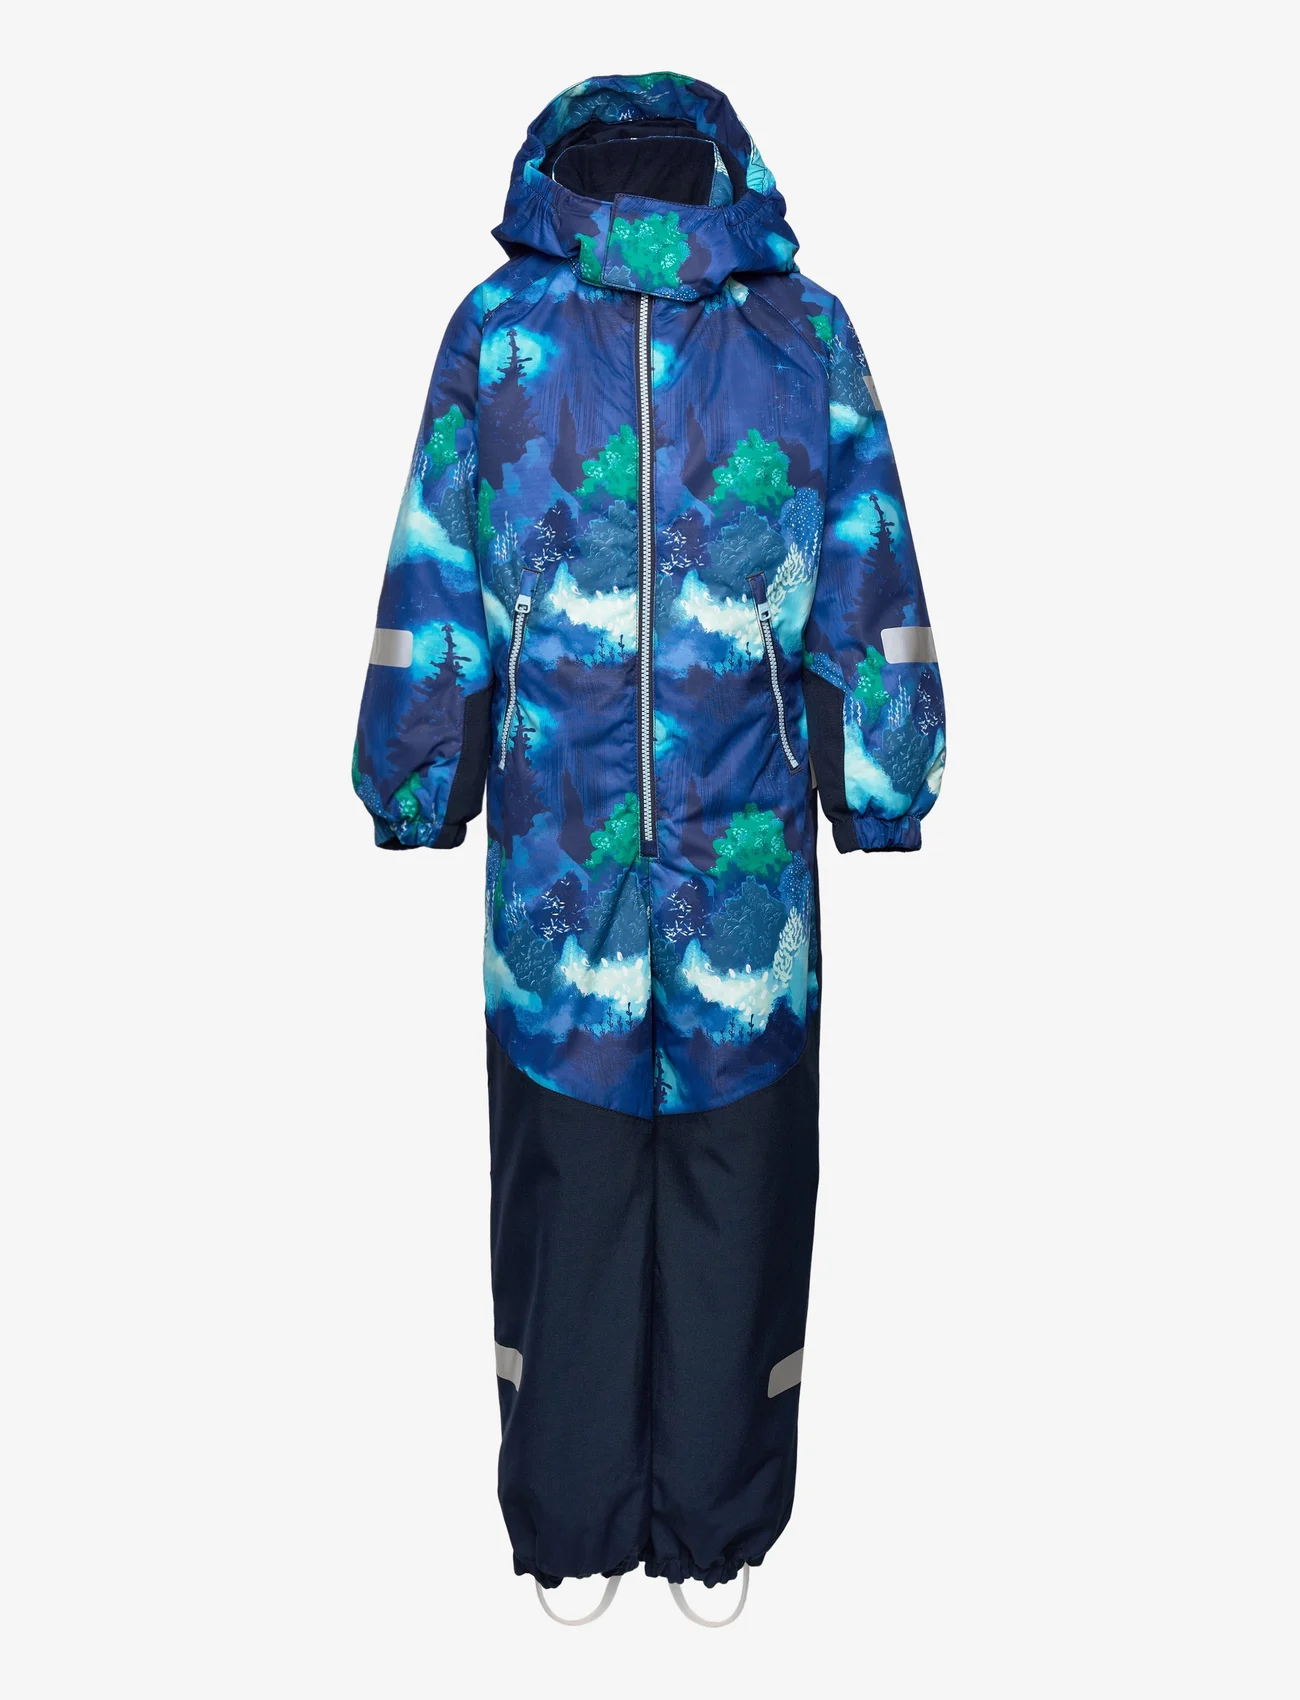 Reima - Kids' winter snowsuit Kurikka - snowsuit - cool blue - 0